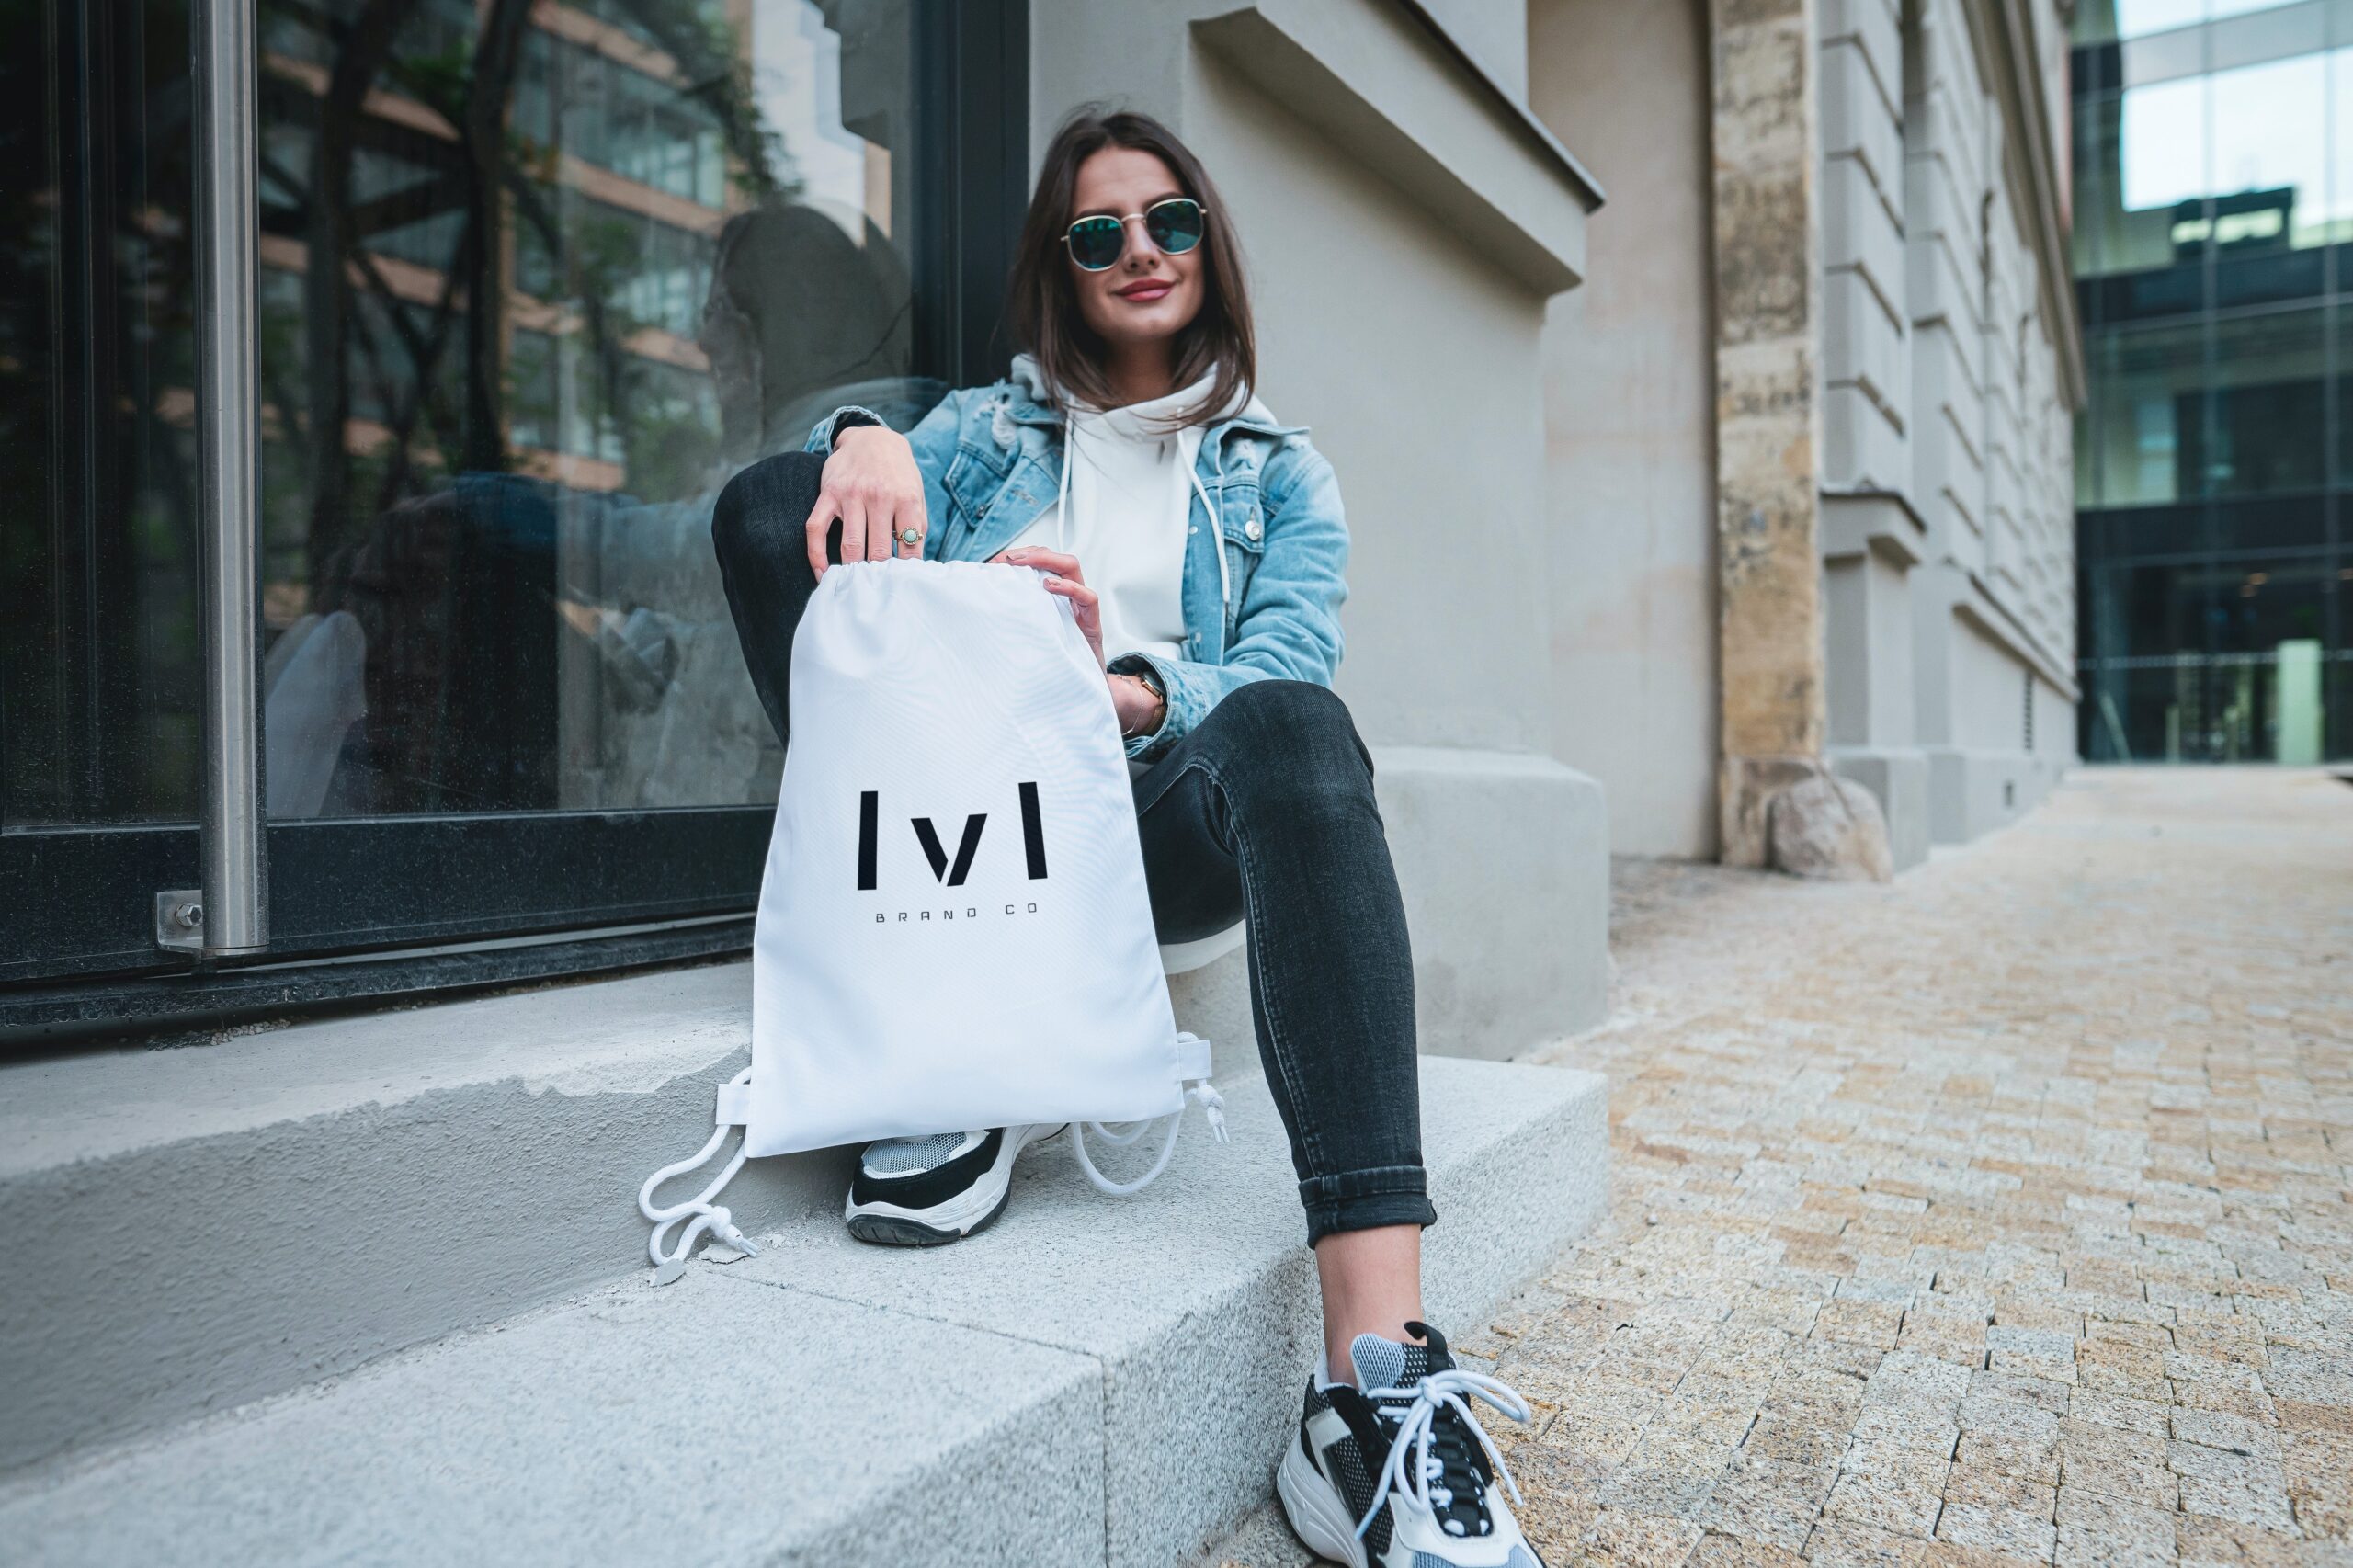 LVL Brand Co - Bag Mockup